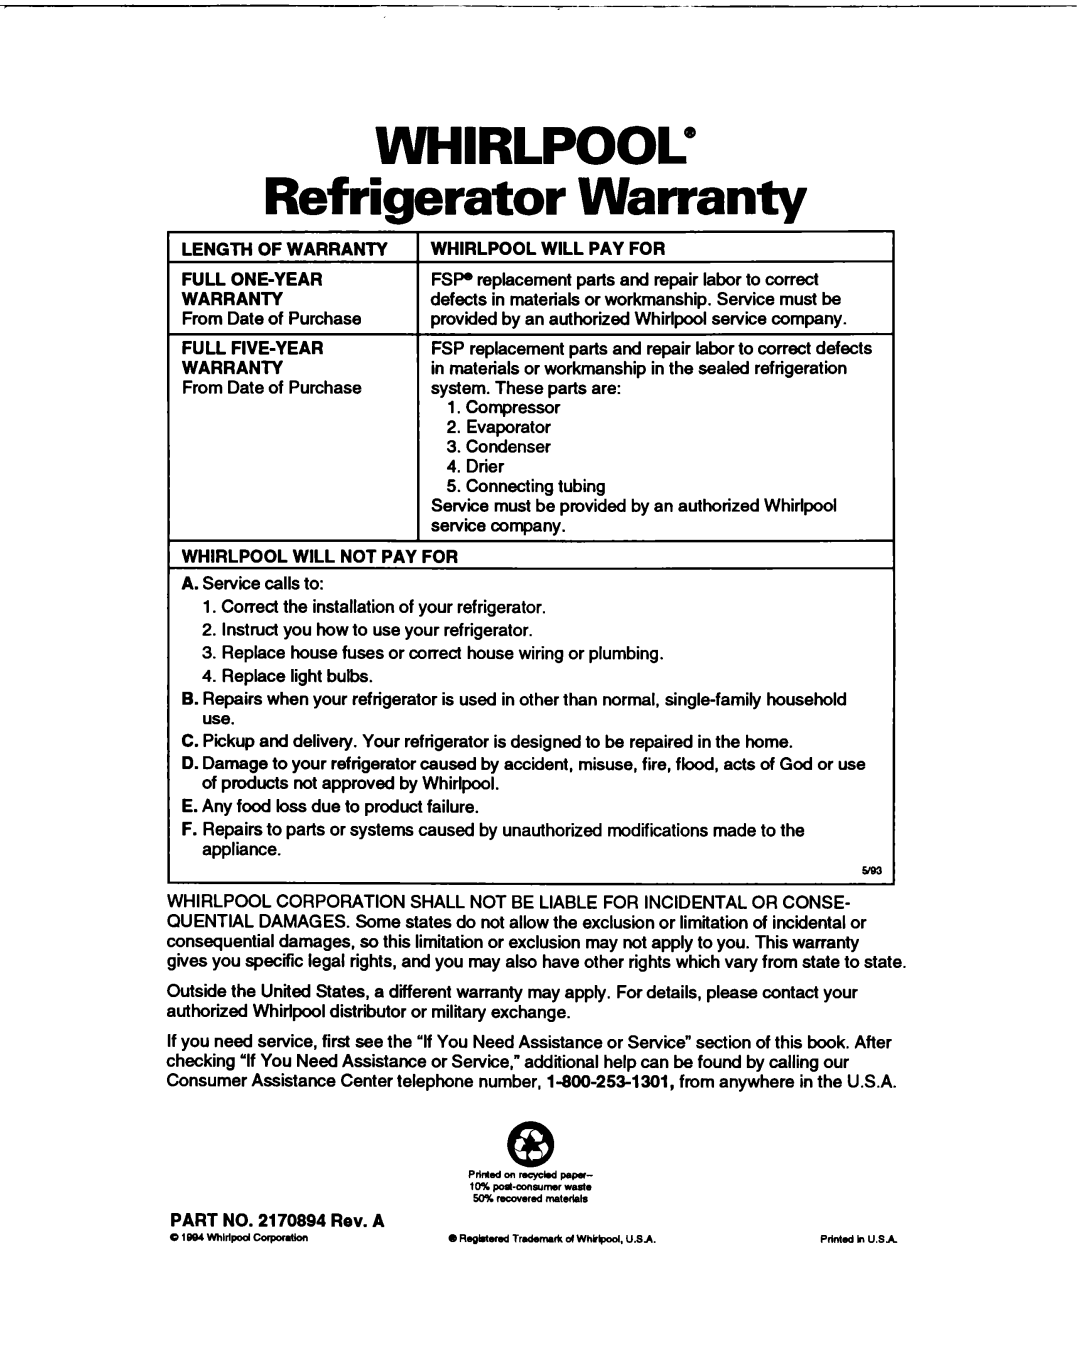 Whirlpool B2lDK WHIRLPOOL@ Refrigerator Warranty, Length Of Warranty Whirlpool Will Pay For, Full One-Year, Full Five-Year 